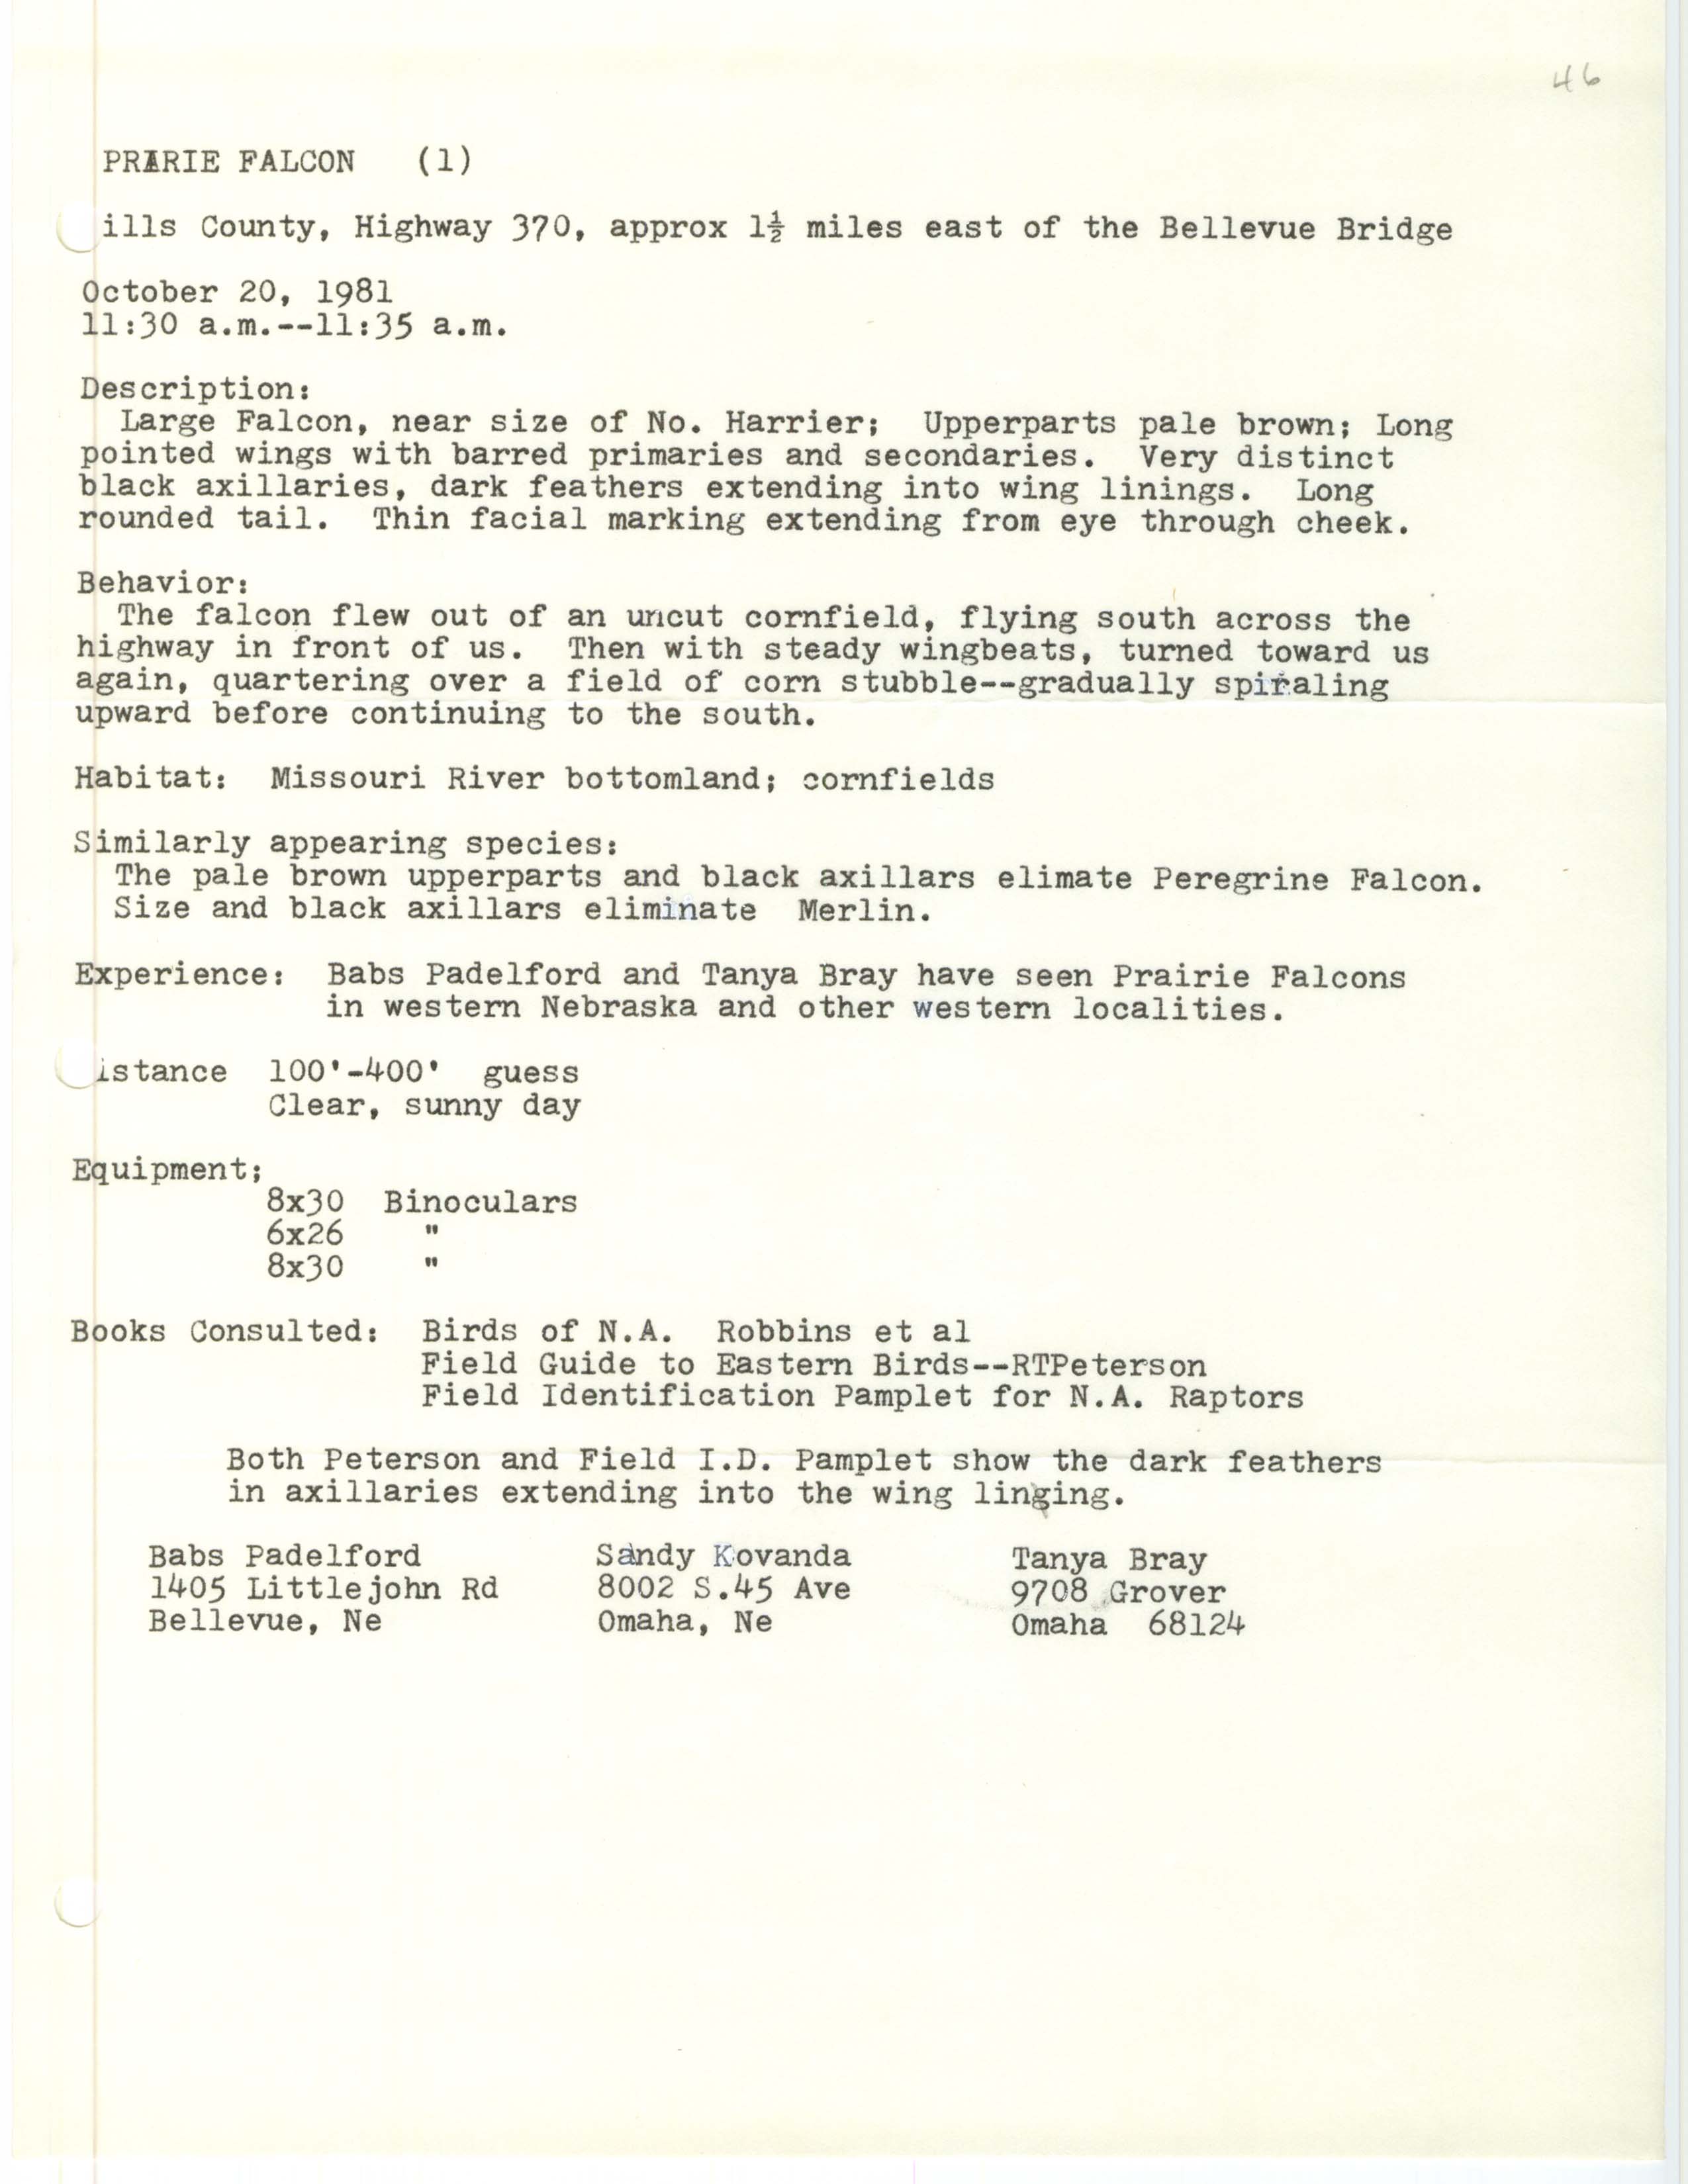 Rare bird documentation form for Prairie Falcon near the Bellevue Bridge, 1981